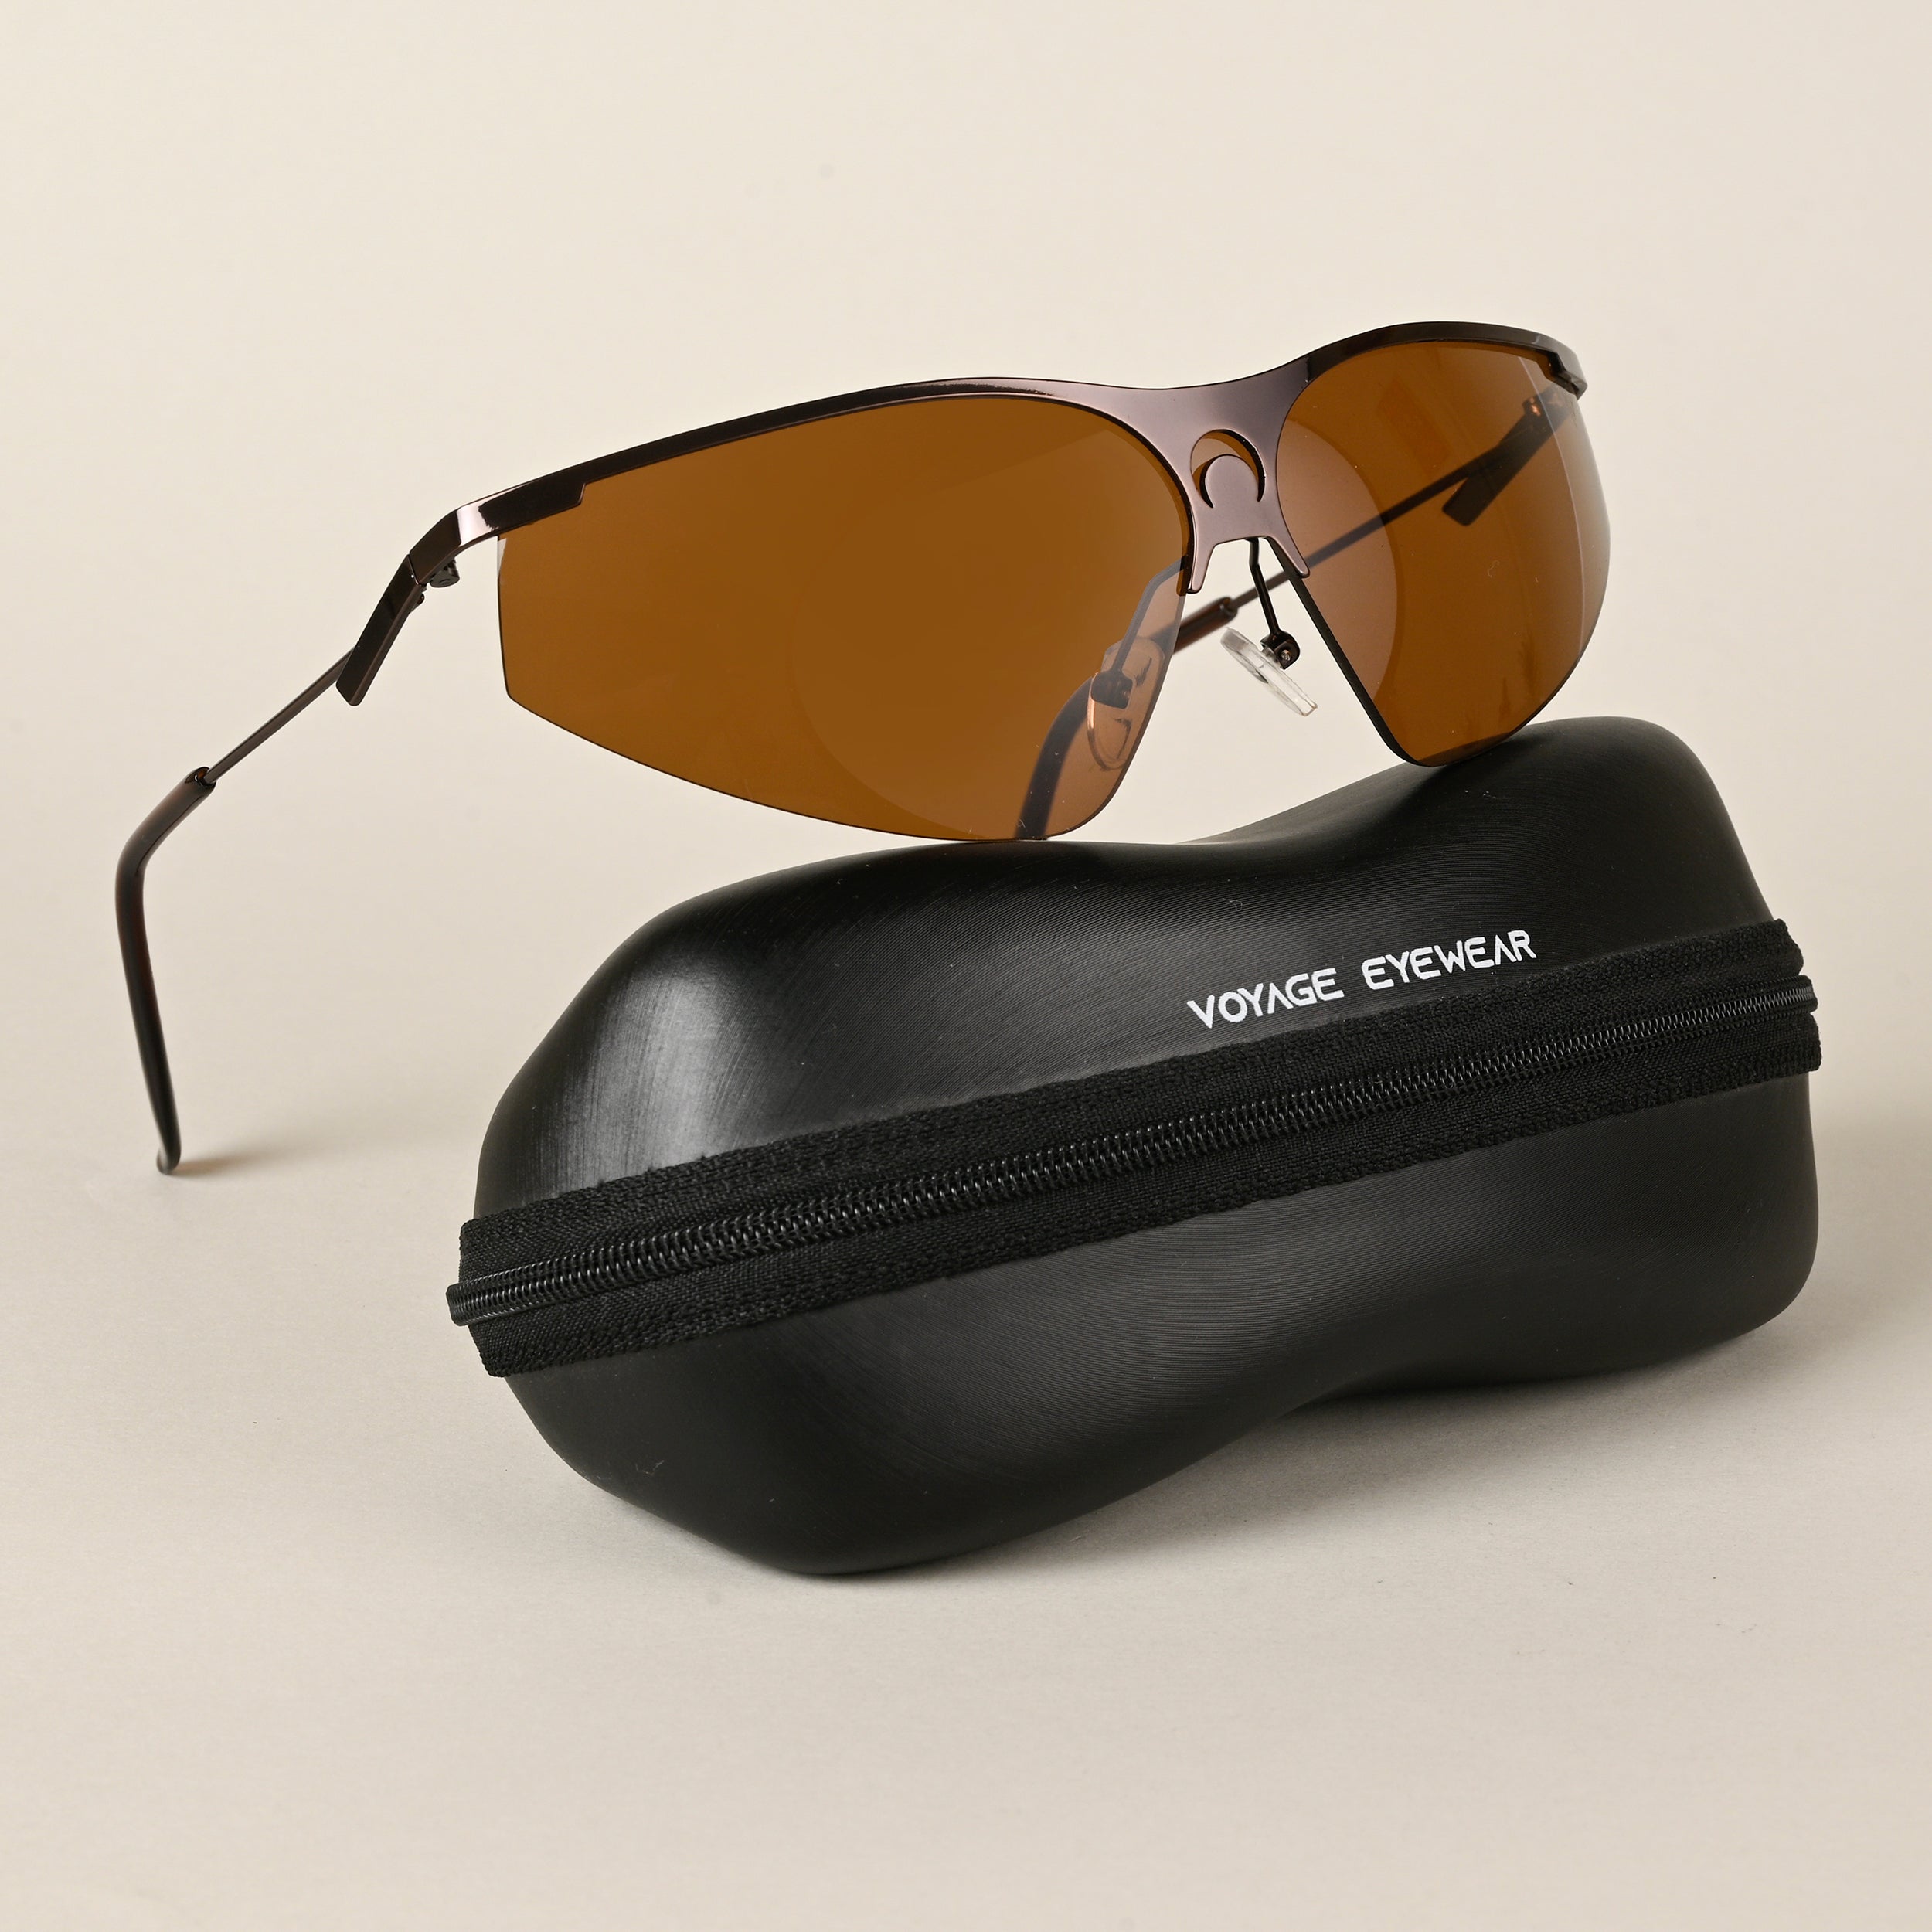 Voyage Brown Wrap-Around Sunglasses for Men & Women (3563MG4223)